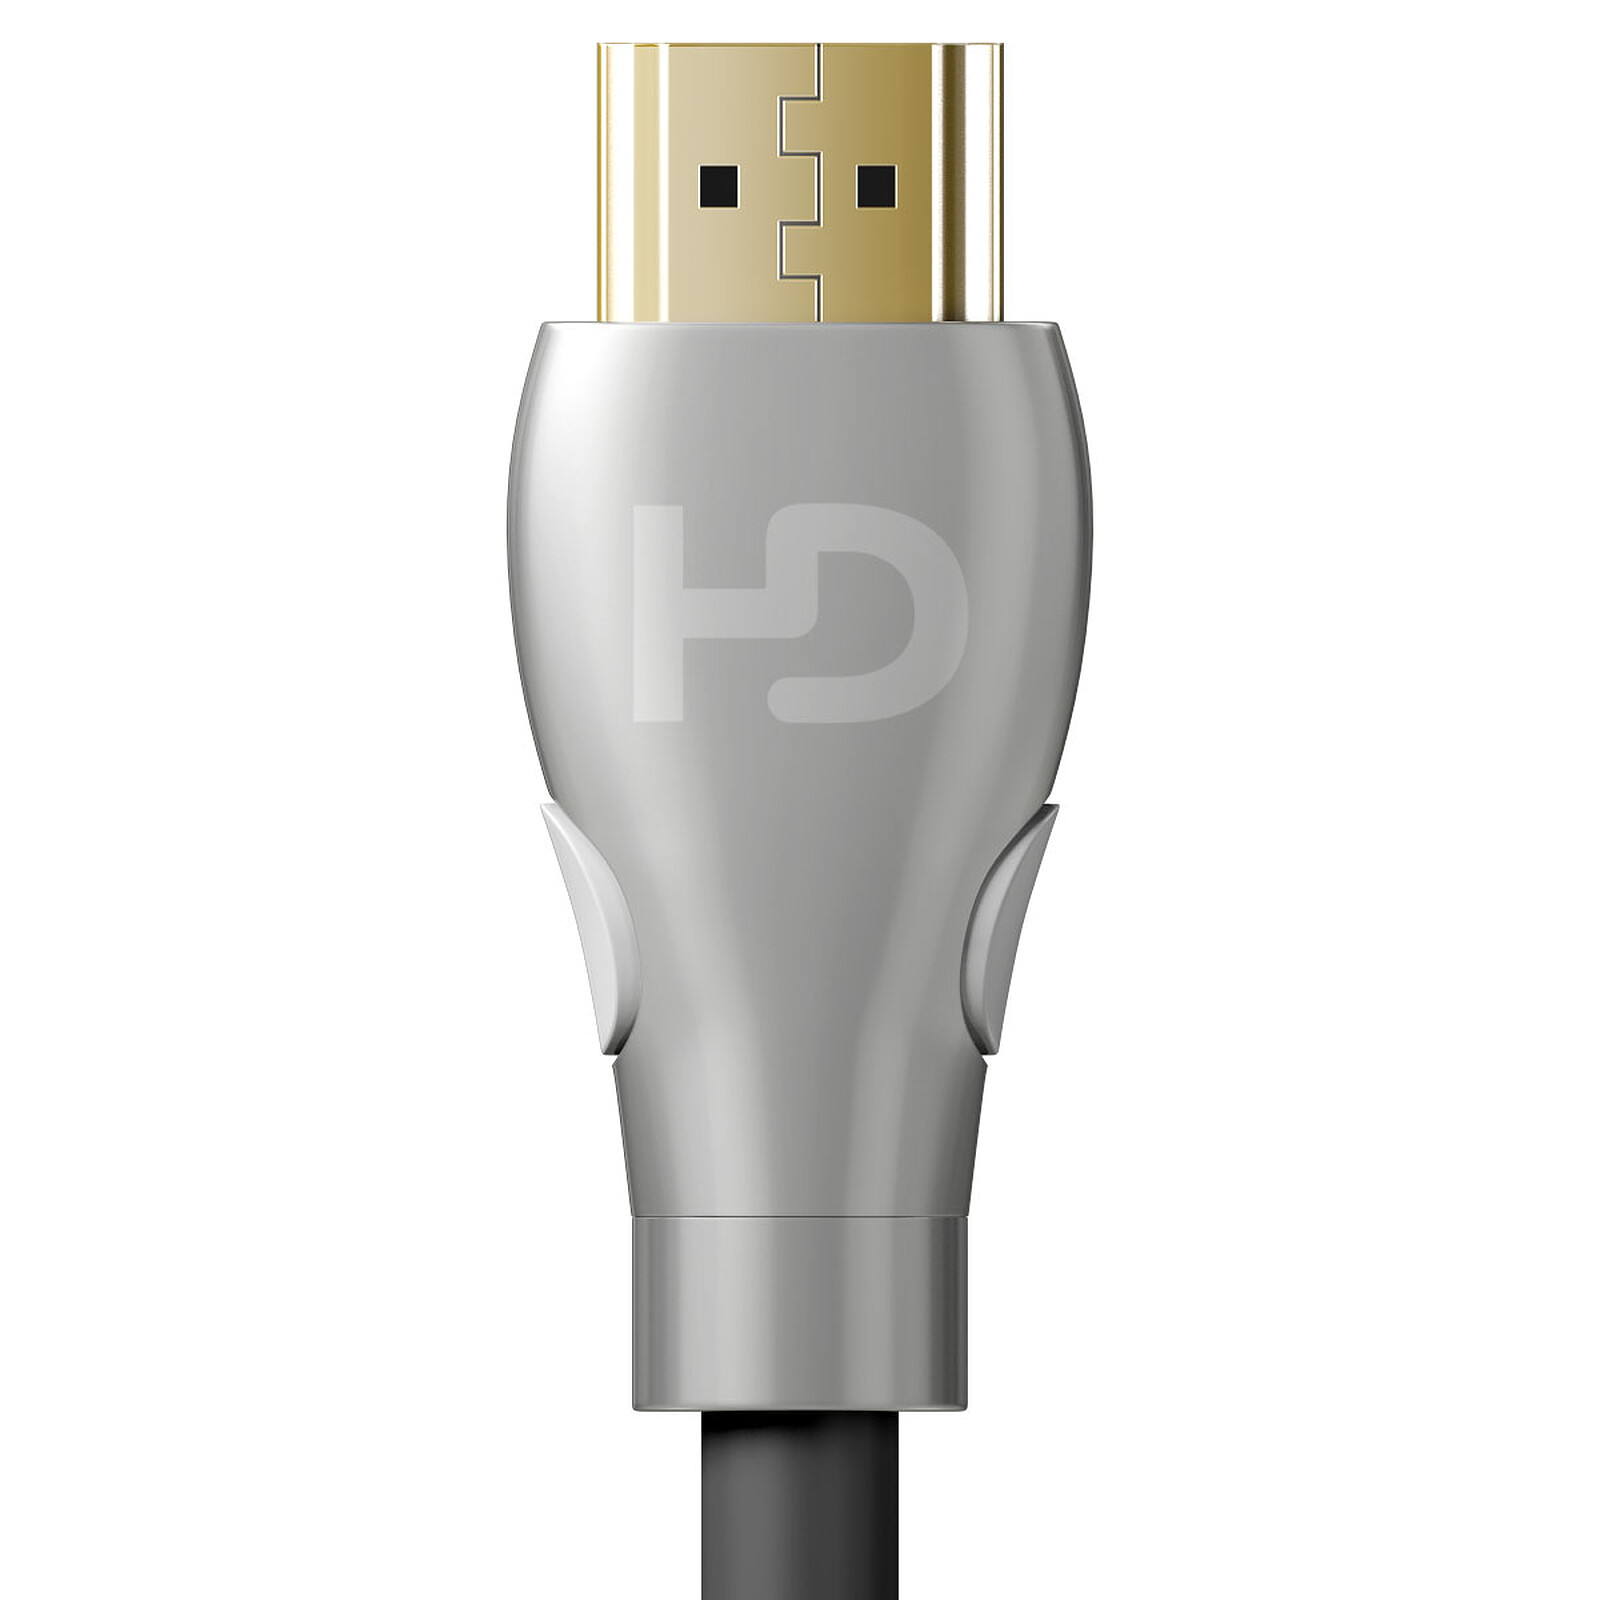 MCL Câble HDMI 2.0 fibre optique (20m) - HDMI - Garantie 3 ans LDLC